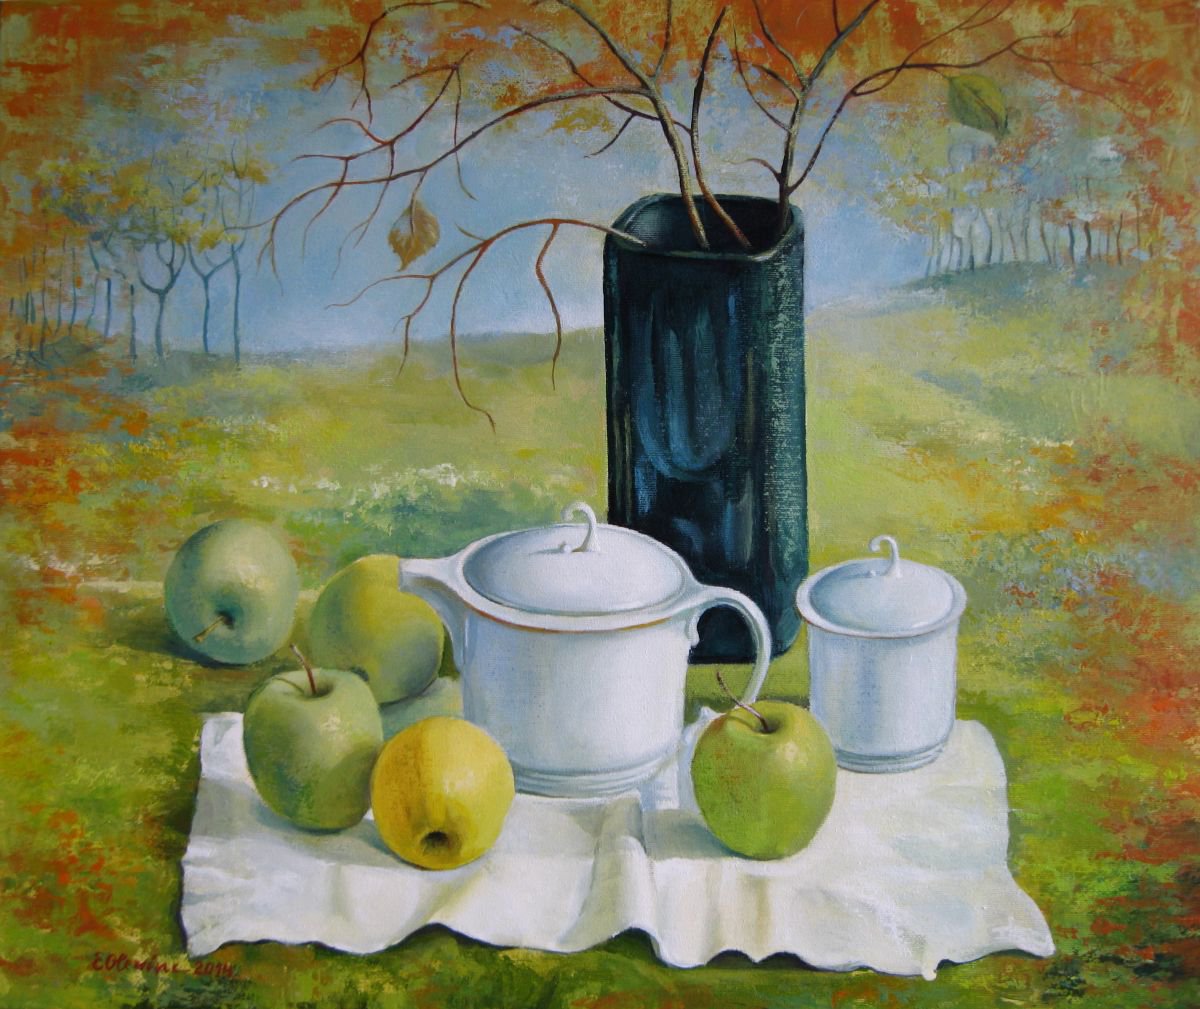 Green apples by Elena Oleniuc